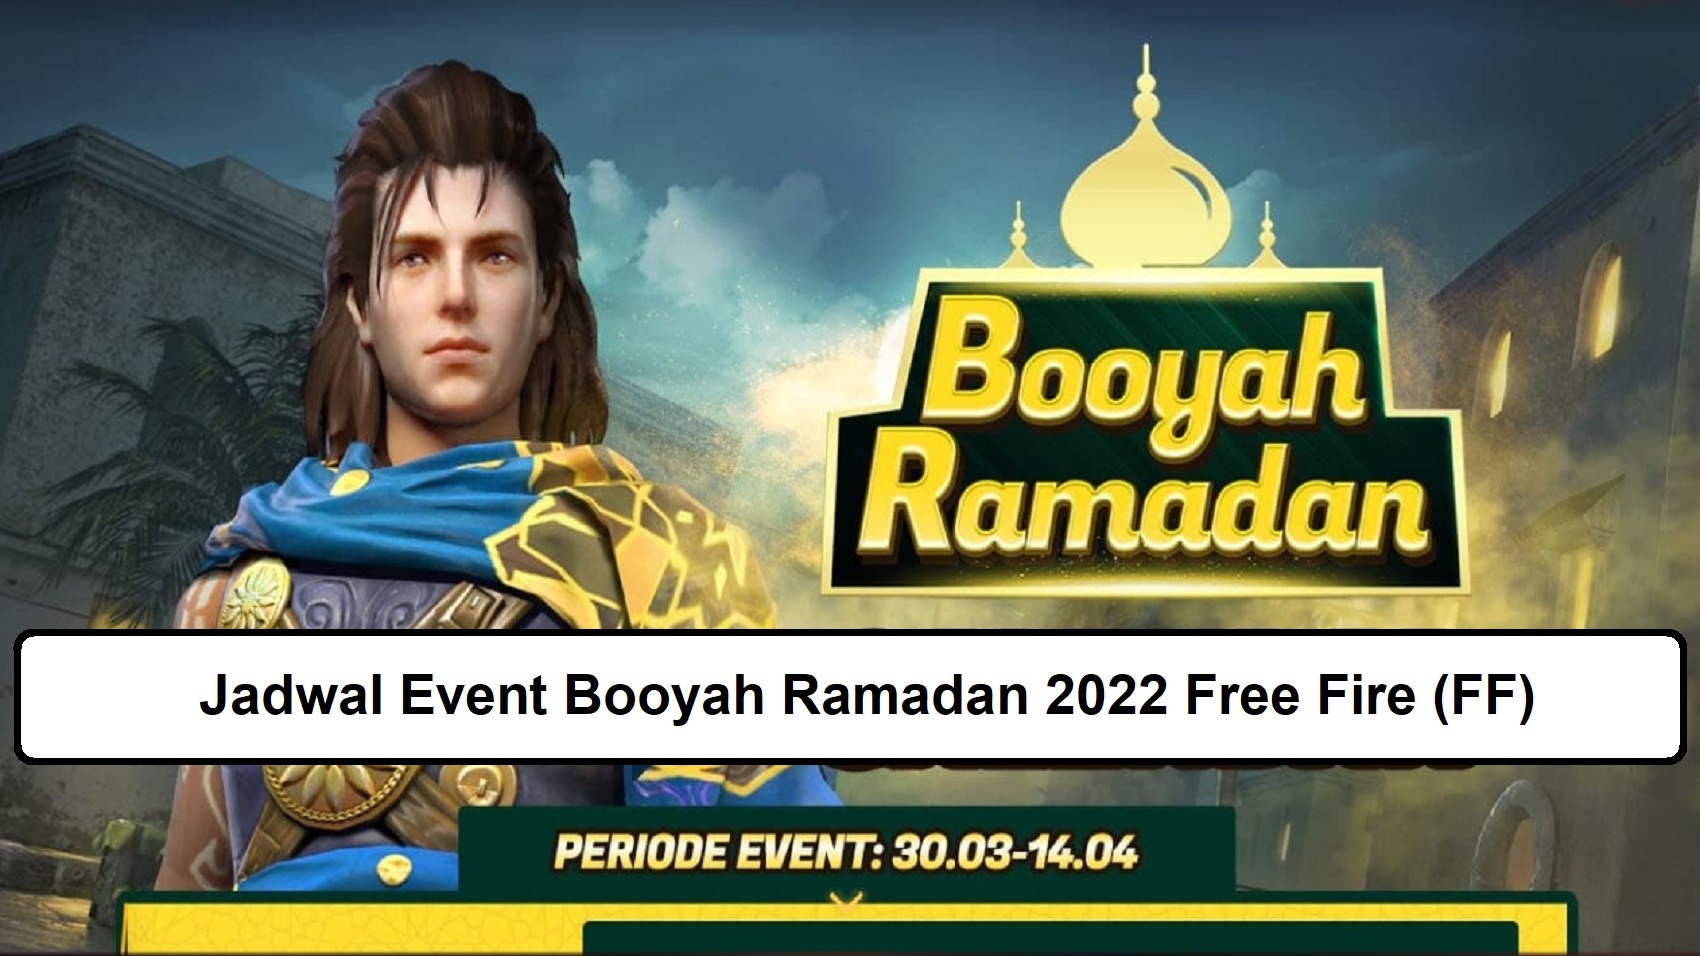 Jadwal Event Booyah Ramadan 2022 Free Fire (FF)